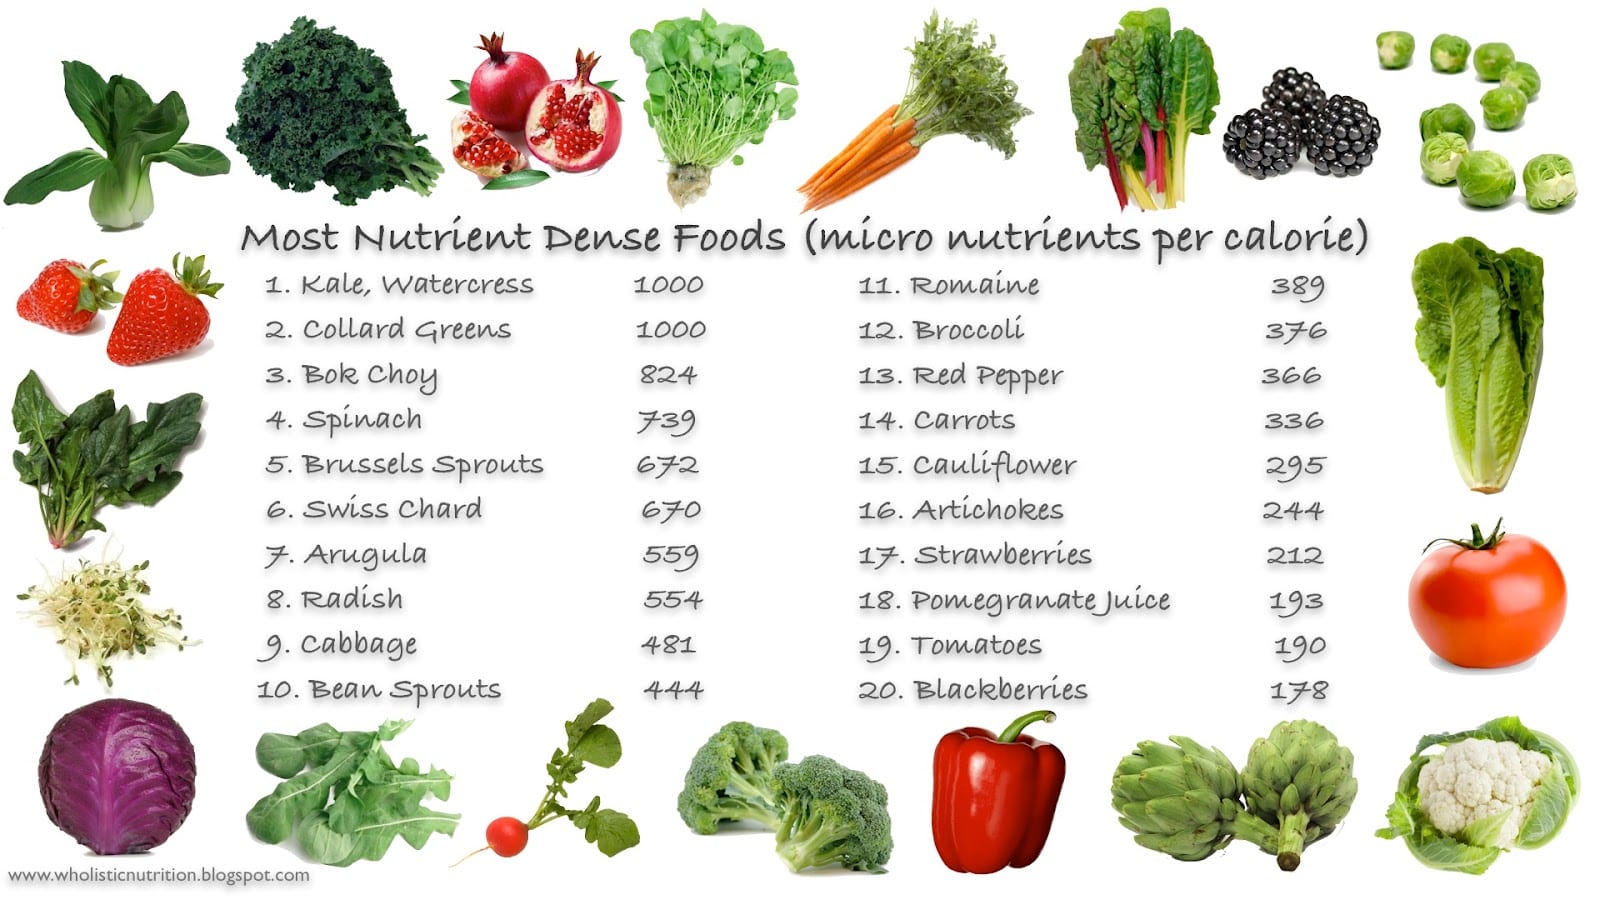 Micronutrient-rich diet